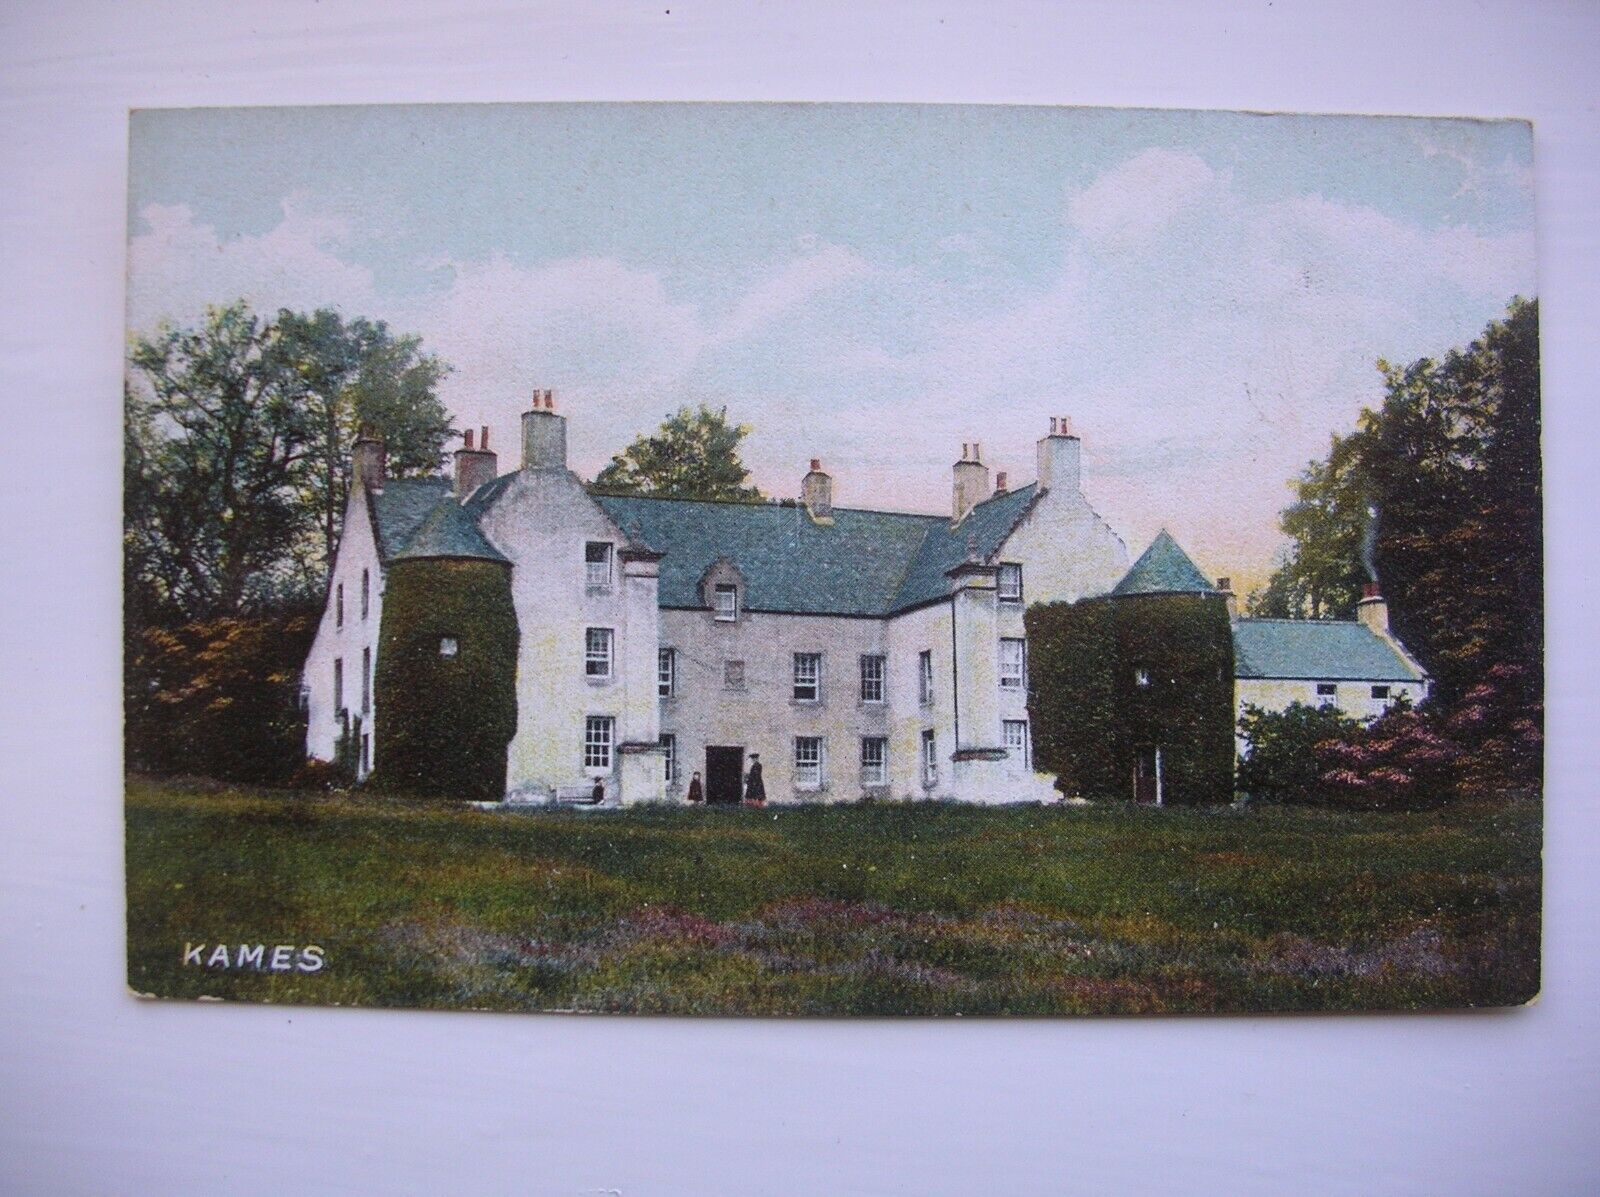 House Clearance - Duns, Berwickshire – Kames House. (Gibson, Coldstream)